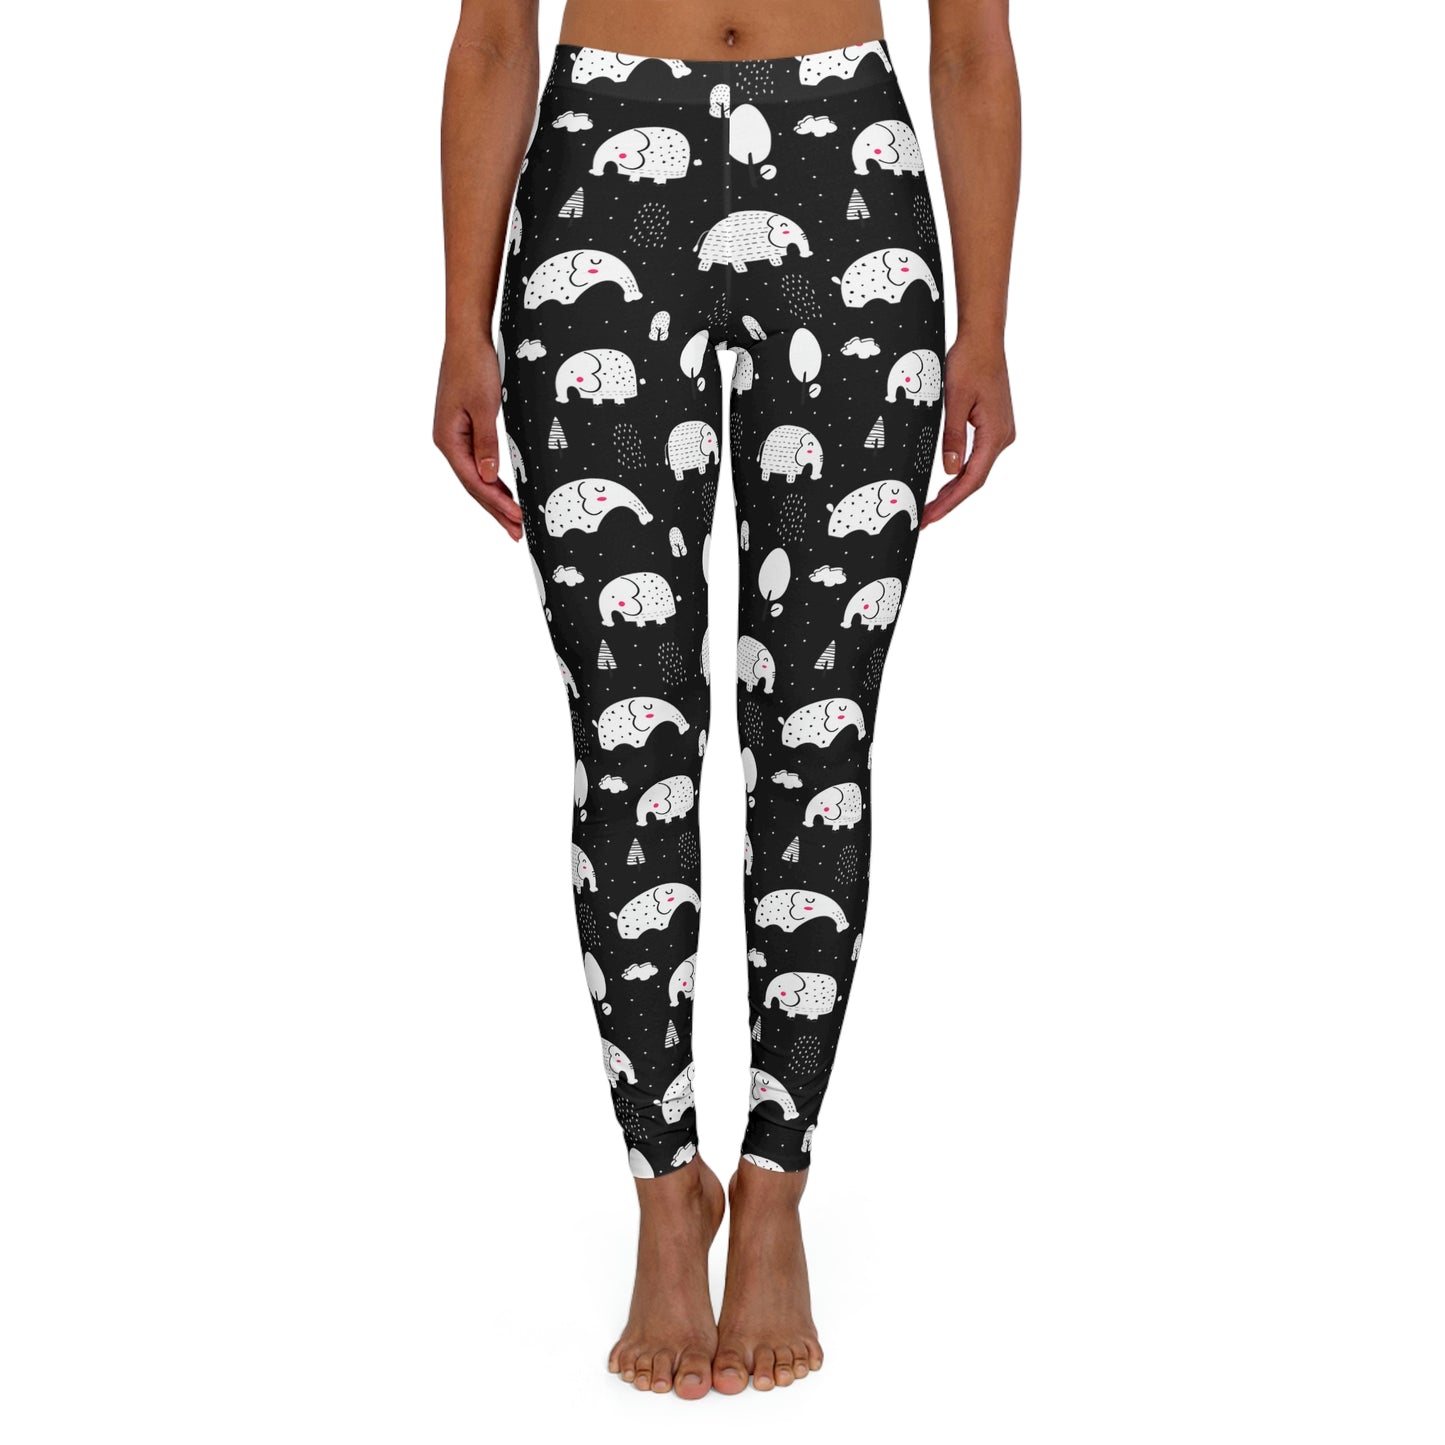 Black and White  Women's Elephant Spandex Leggings, Peach Fit Leggings, Acrobatics pants , Yoga spandex